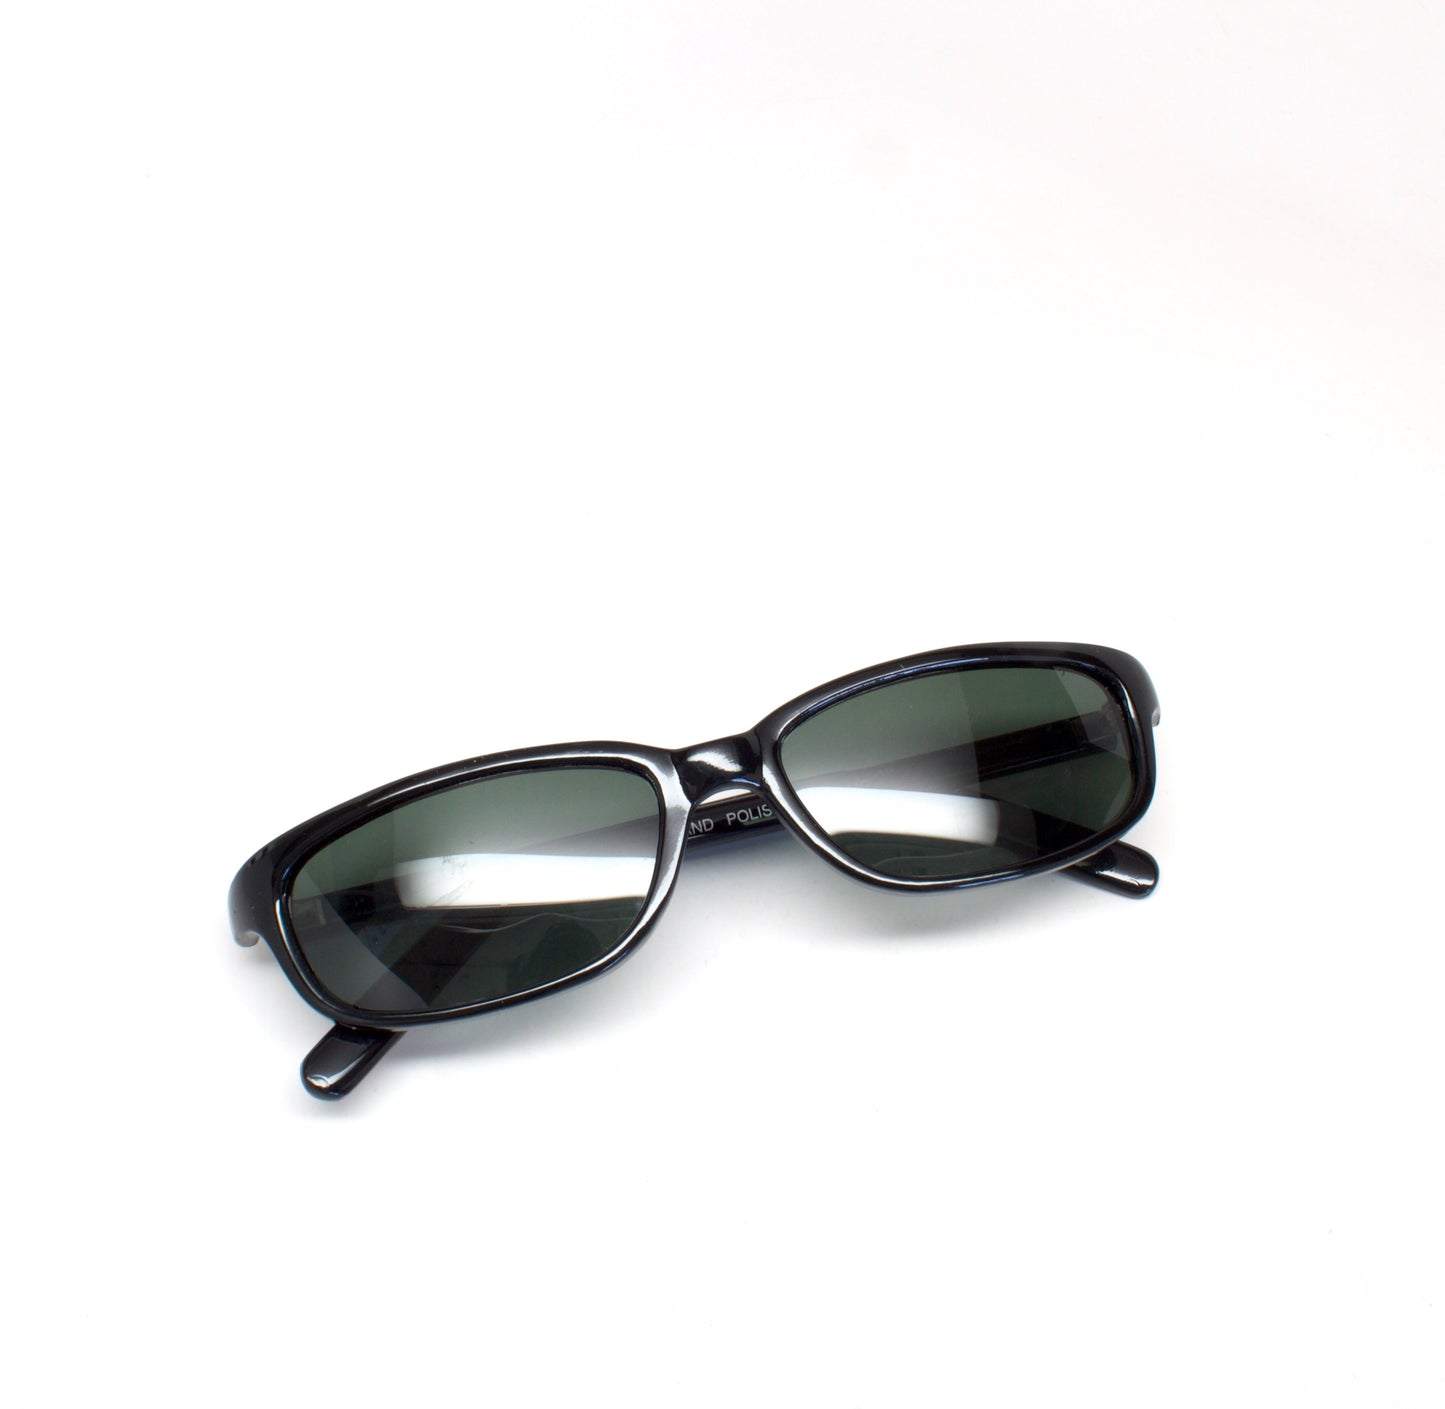 Vintage Small Size Narrow Frame Slim Rectangle Sunglasses - Black